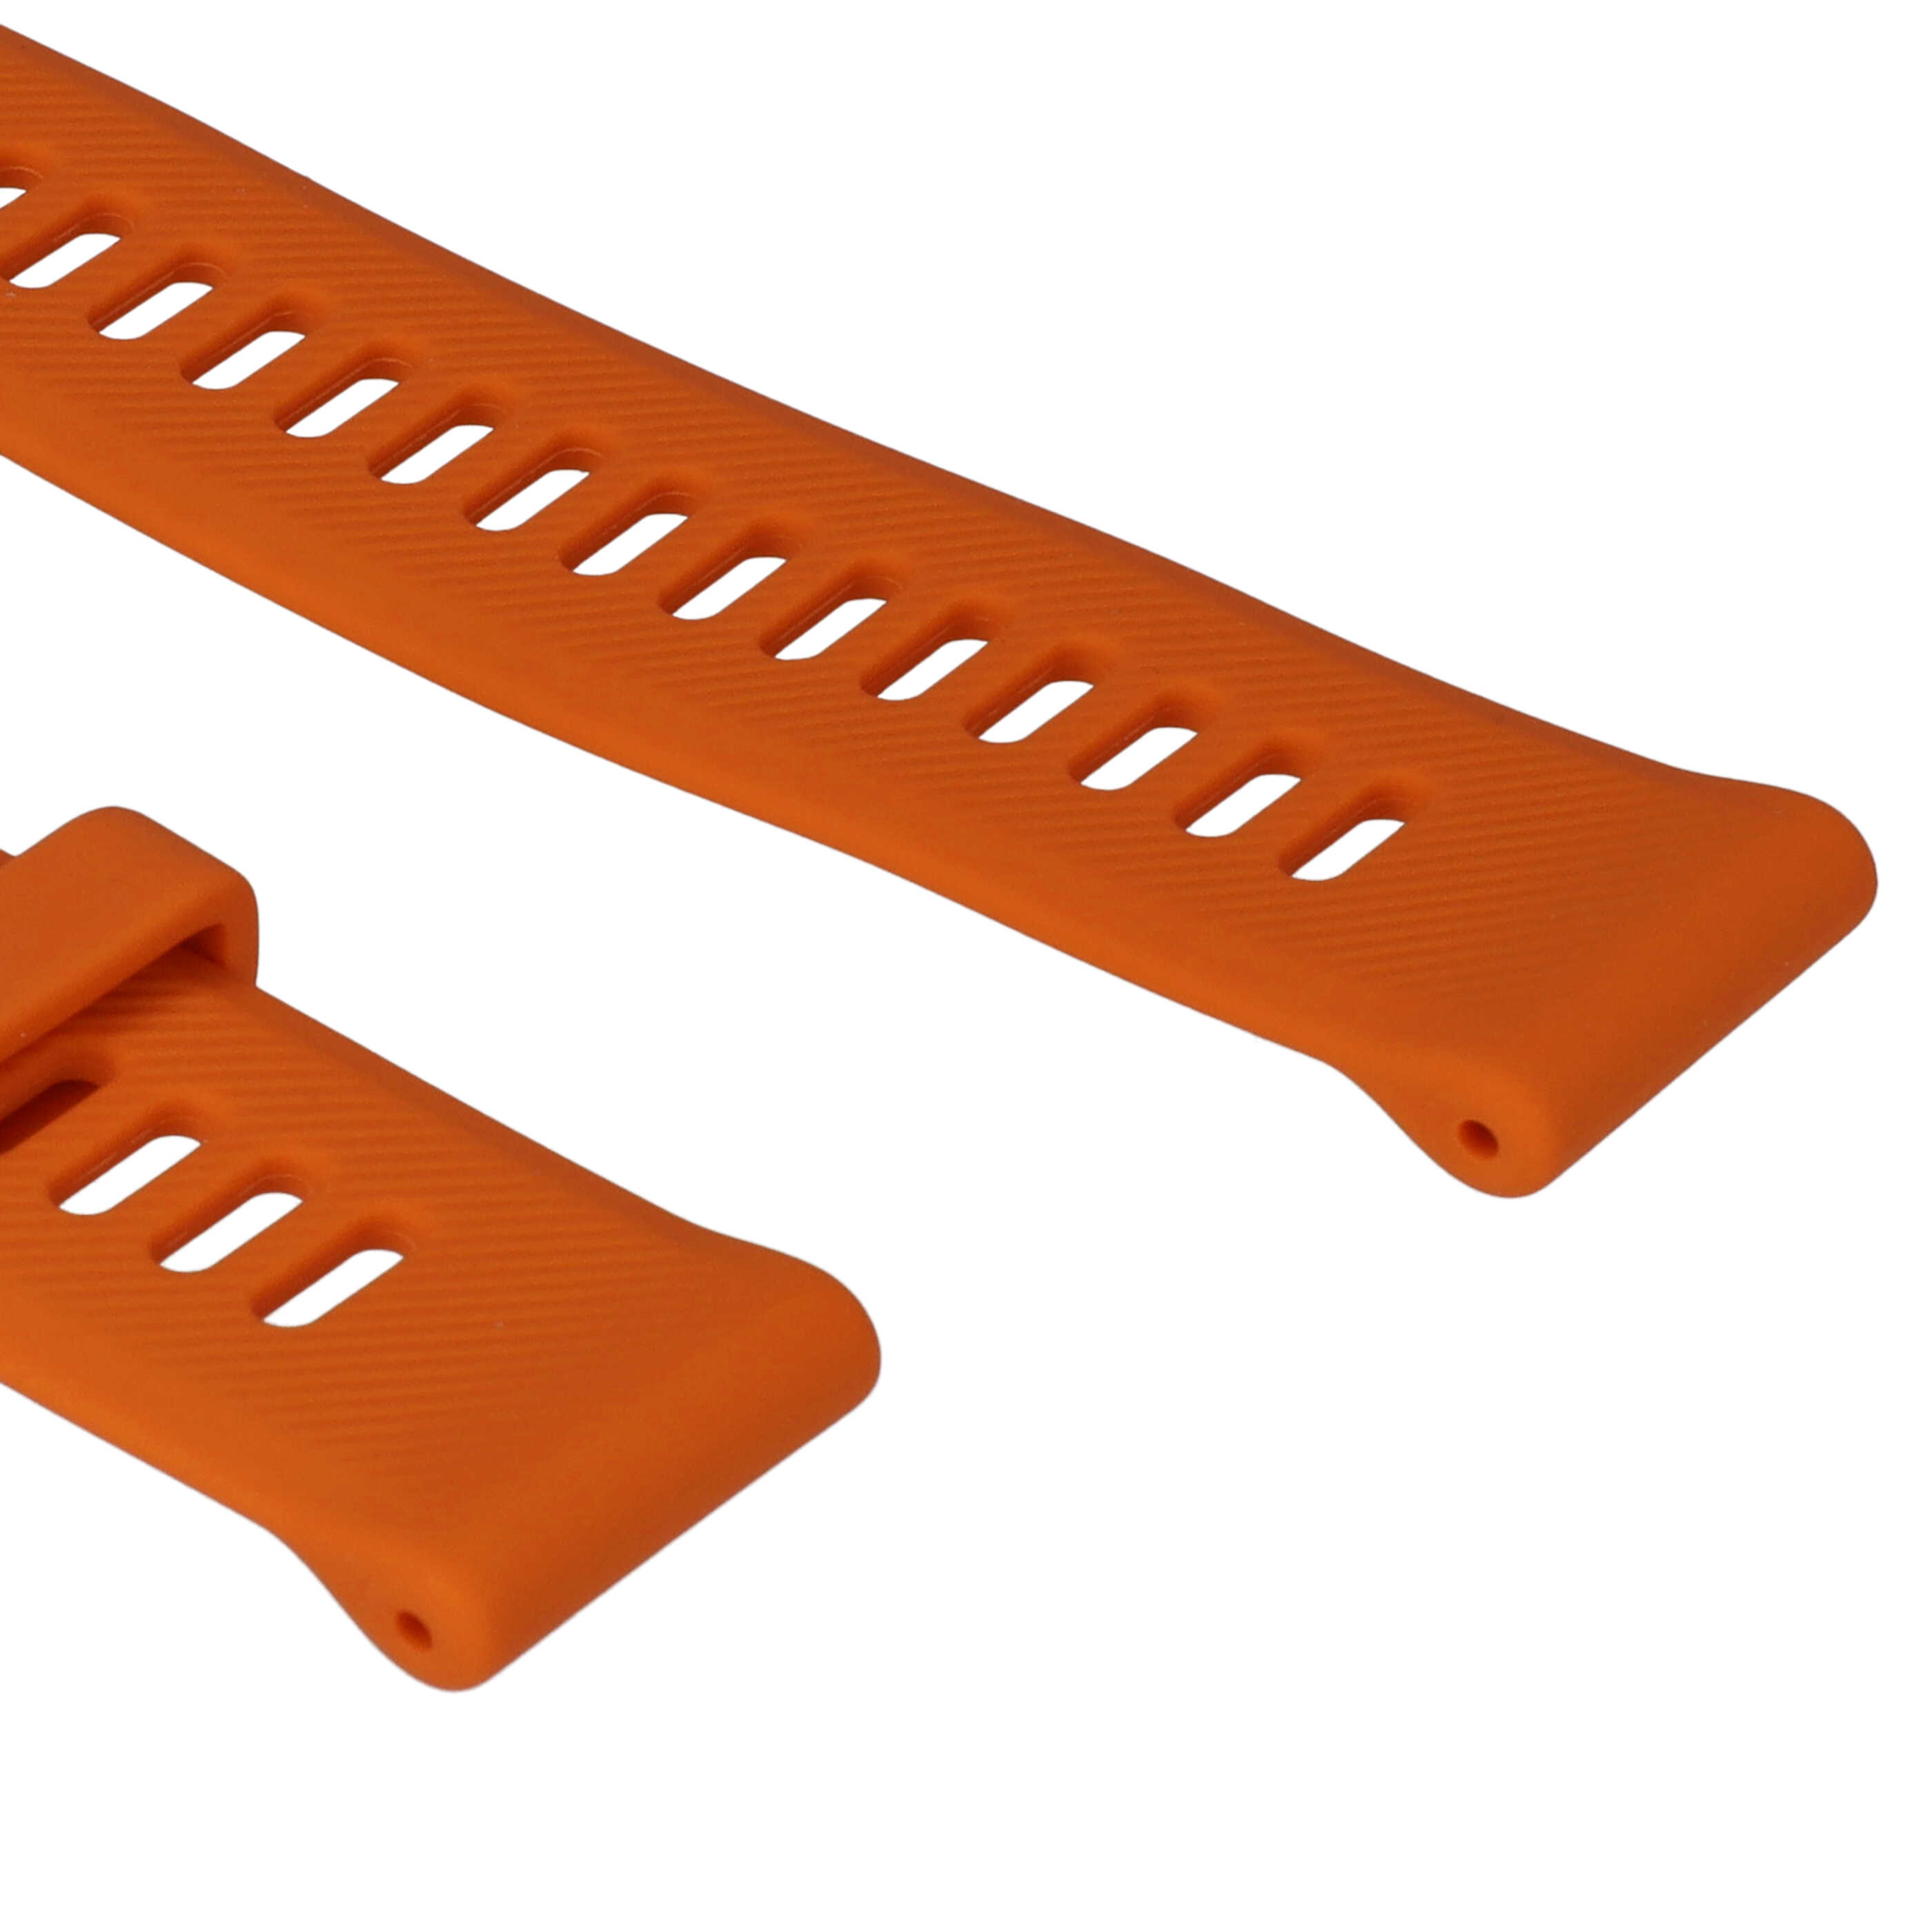 wristband for Garmin Forerunner Smartwatch - 9 + 12.2 cm long, 22mm wide, silicone, orange